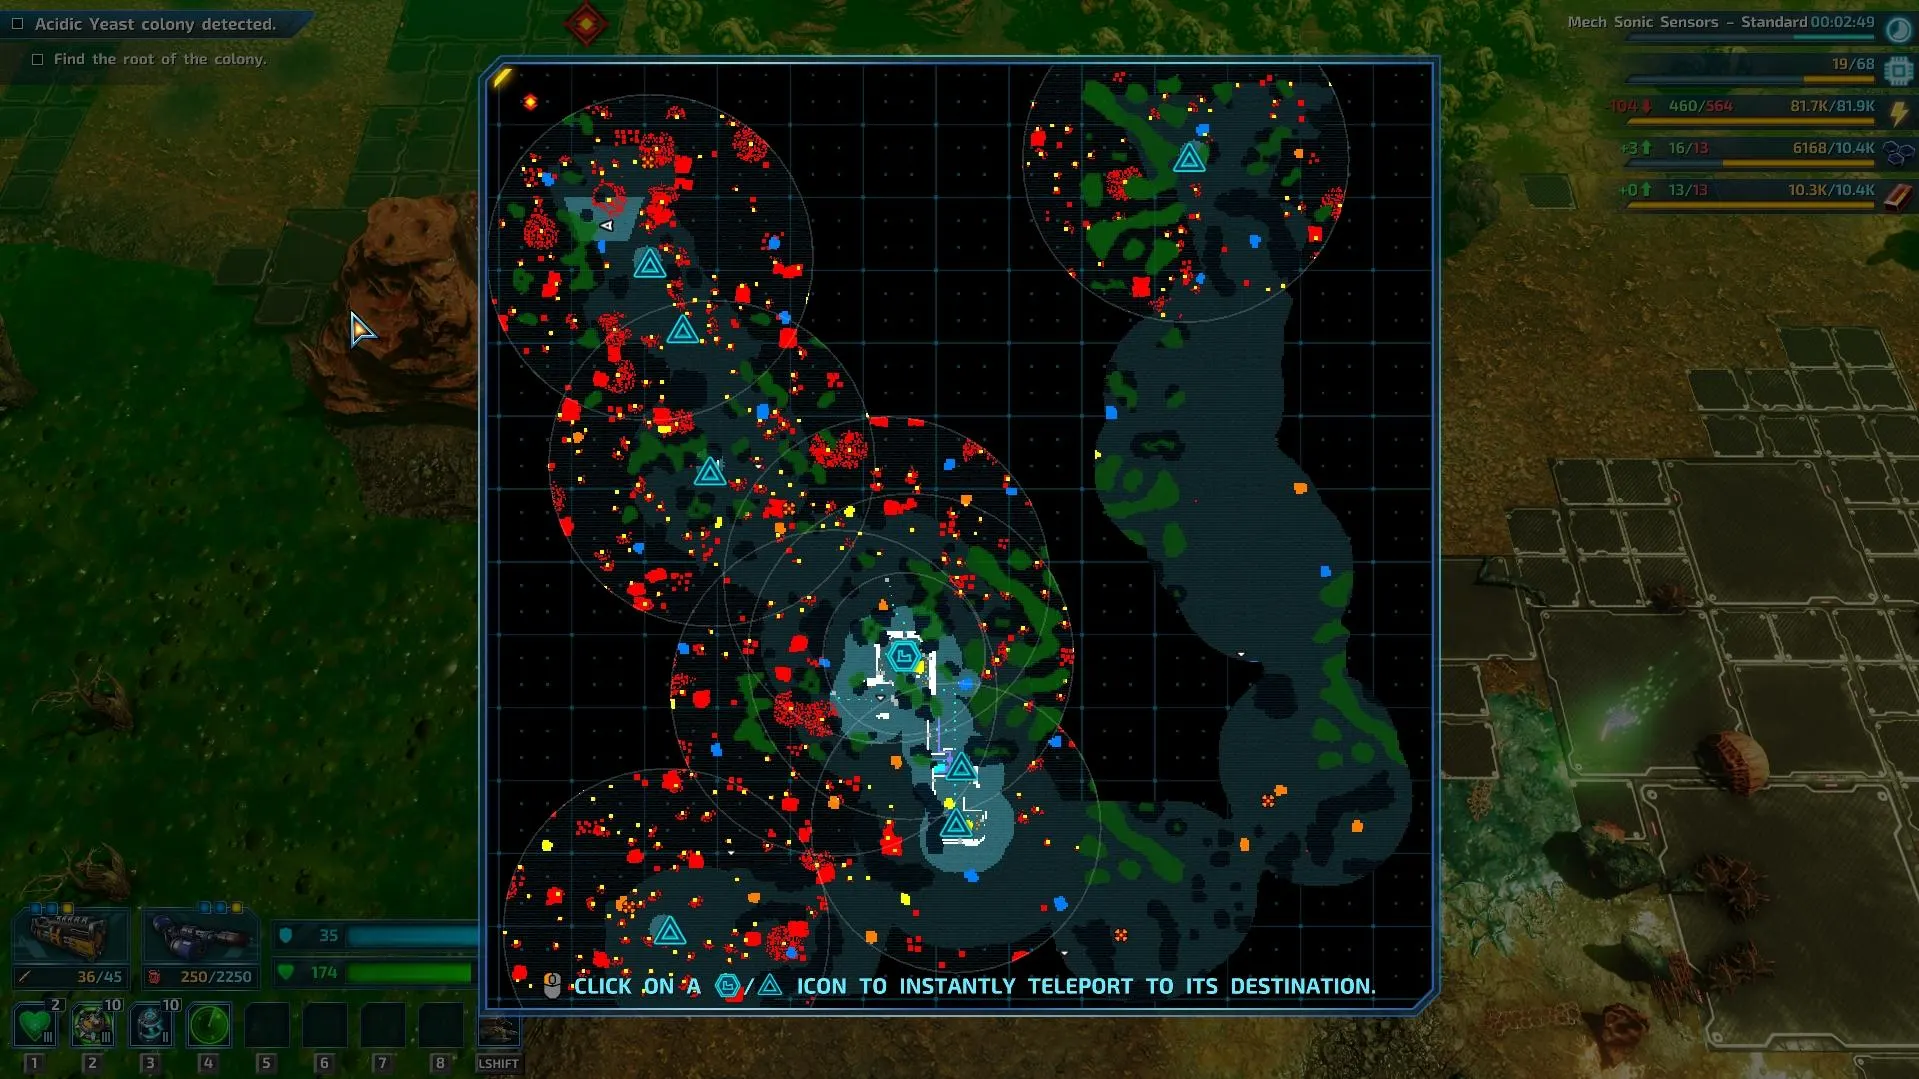 The Riftbreaker - Acid Yeast Destroyed Map Screenshot